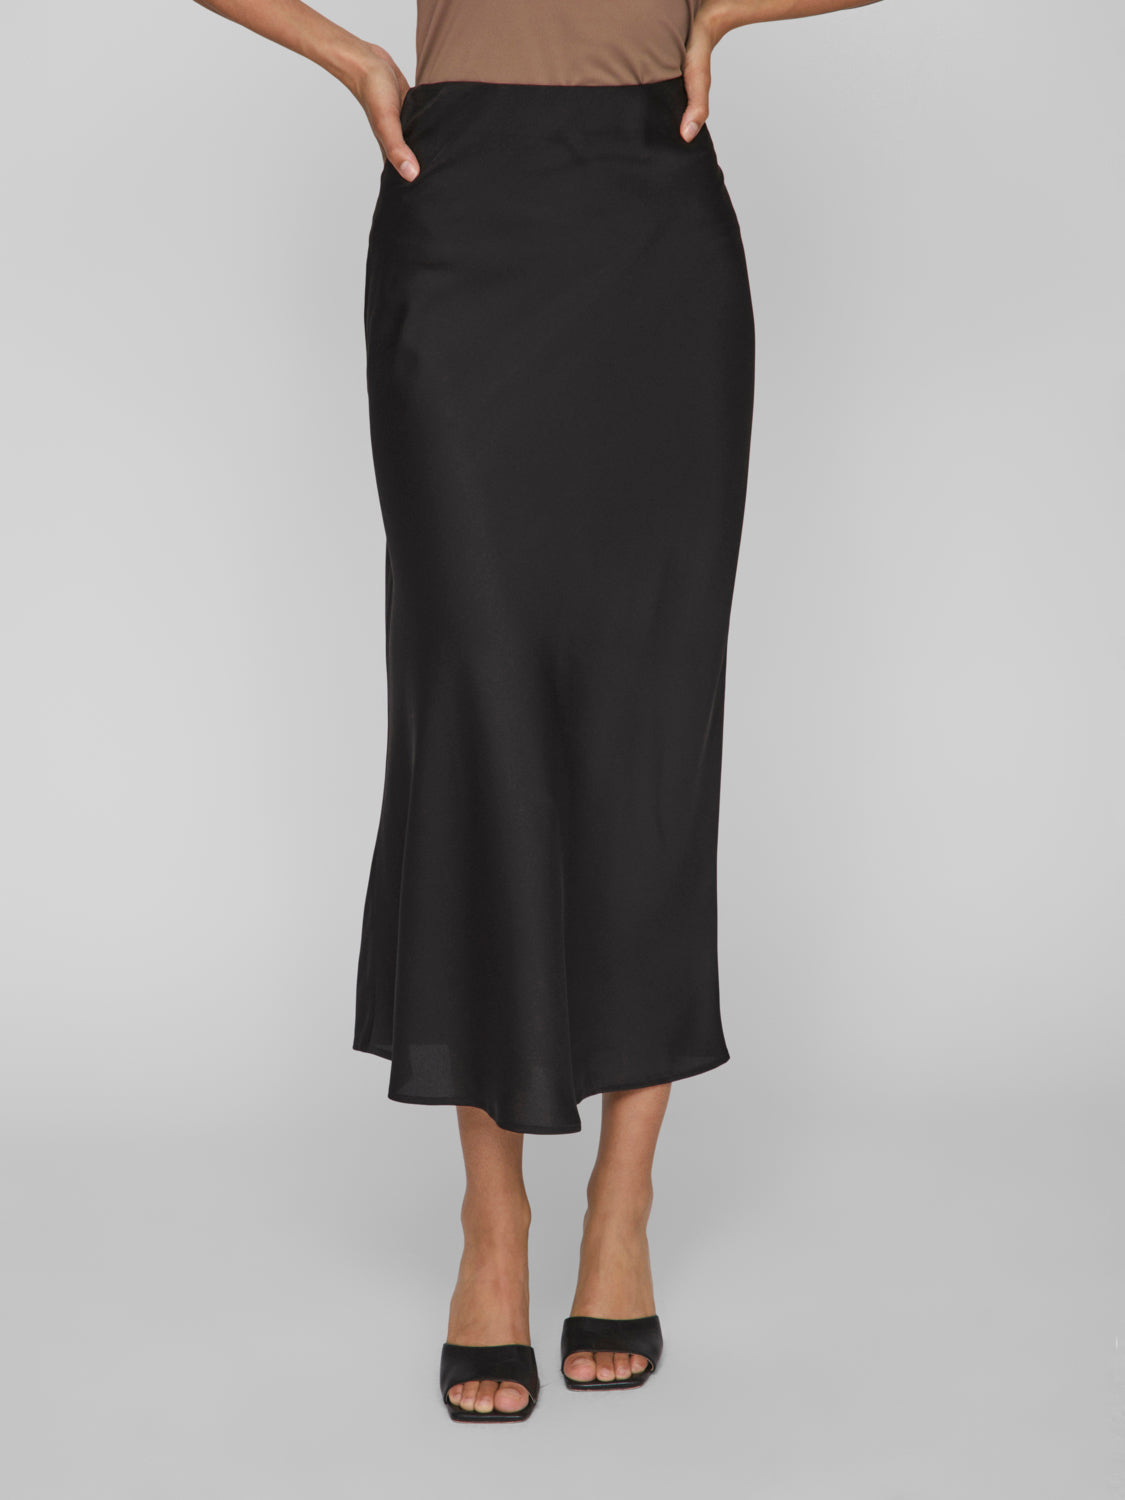 VIELLETTE Skirt - Black